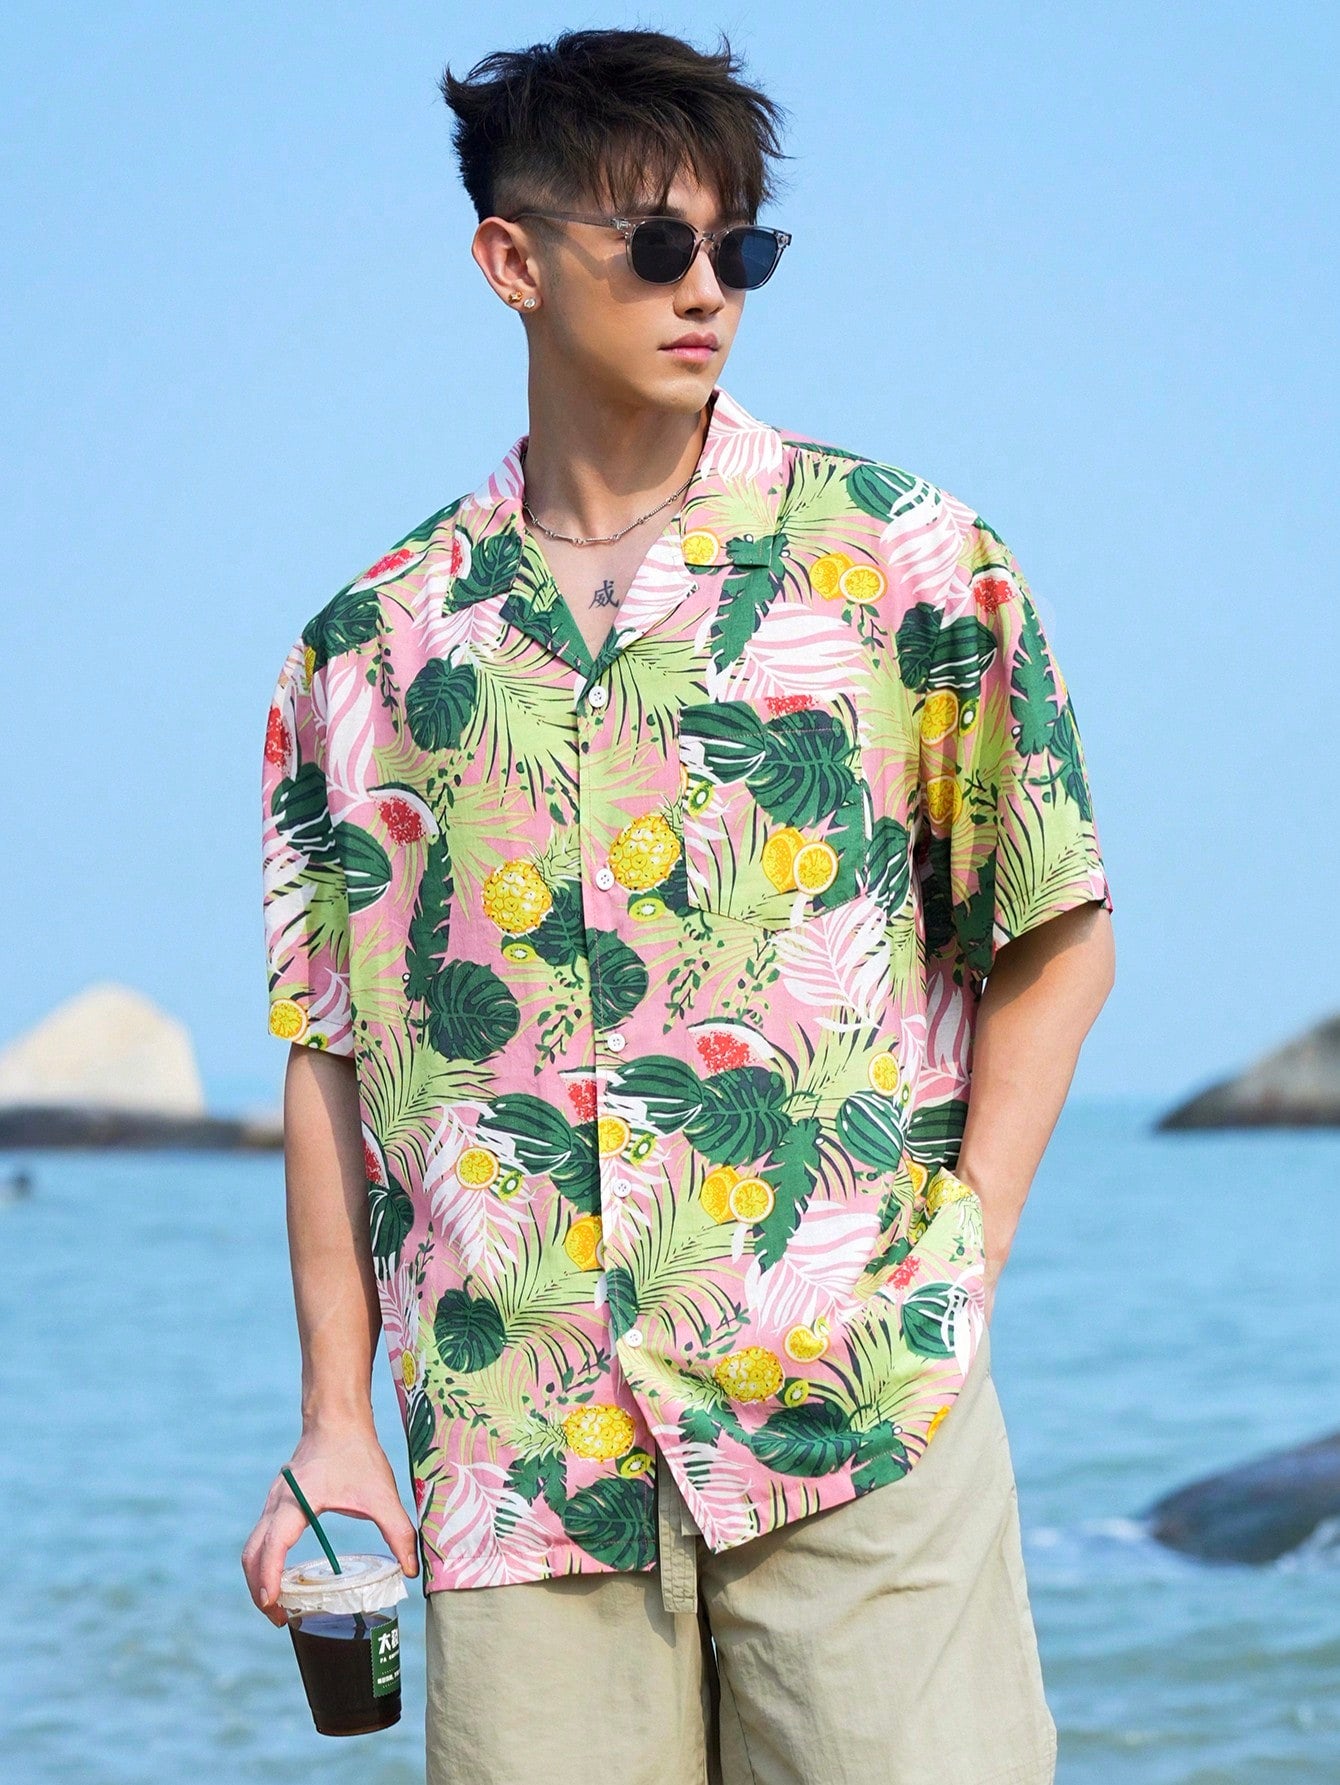 Men Floral Print Short Sleeve Beach Shirt, Vacation Style, Summer